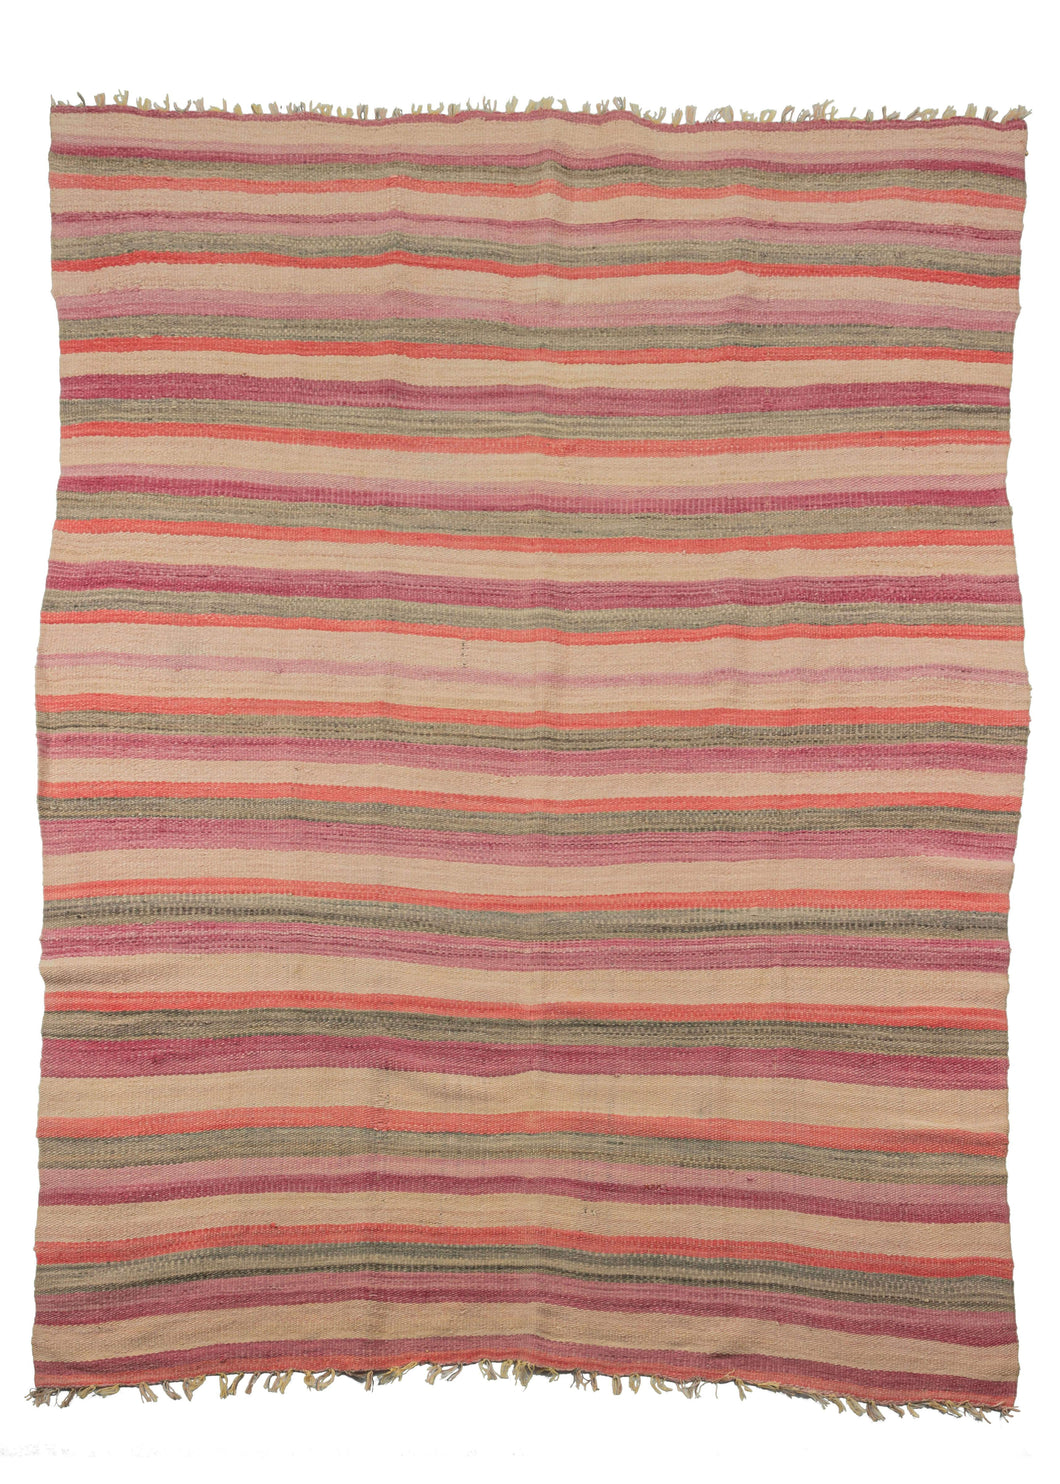 Banded Rio Grande Blanket - 4'6 x 6'1